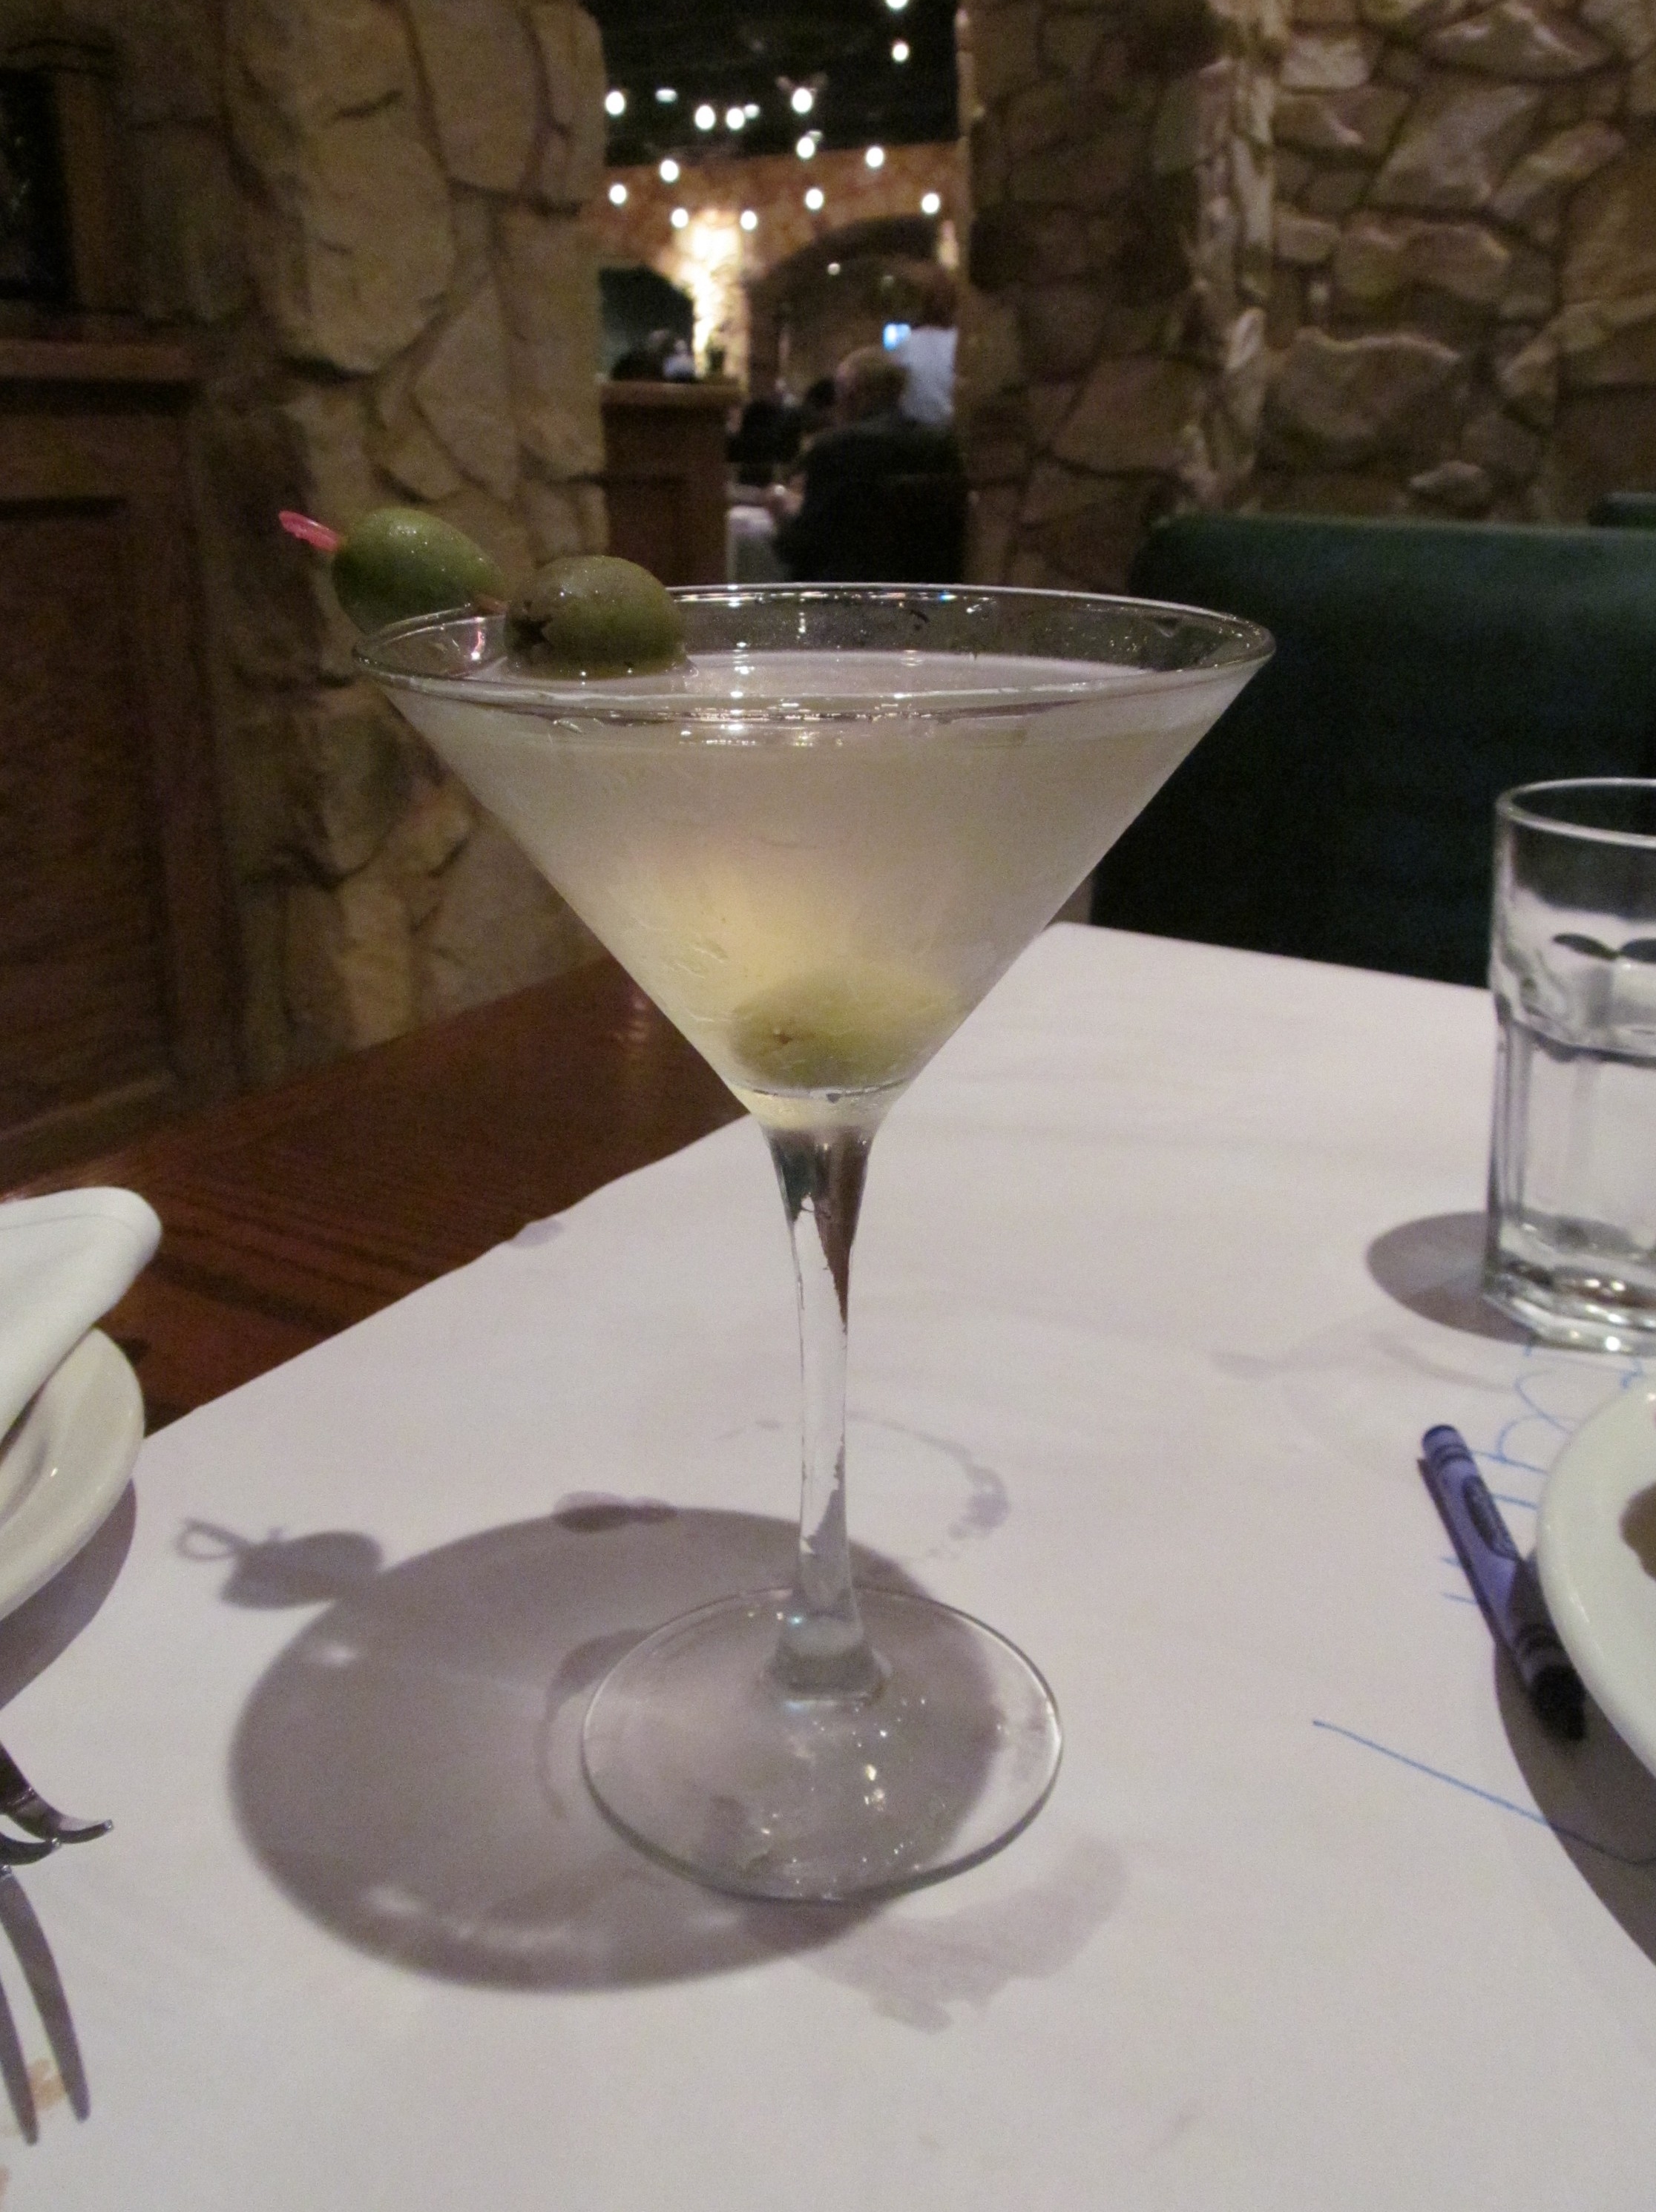 I. Introduction to Vodka Martini: Shaken, Not Stirred